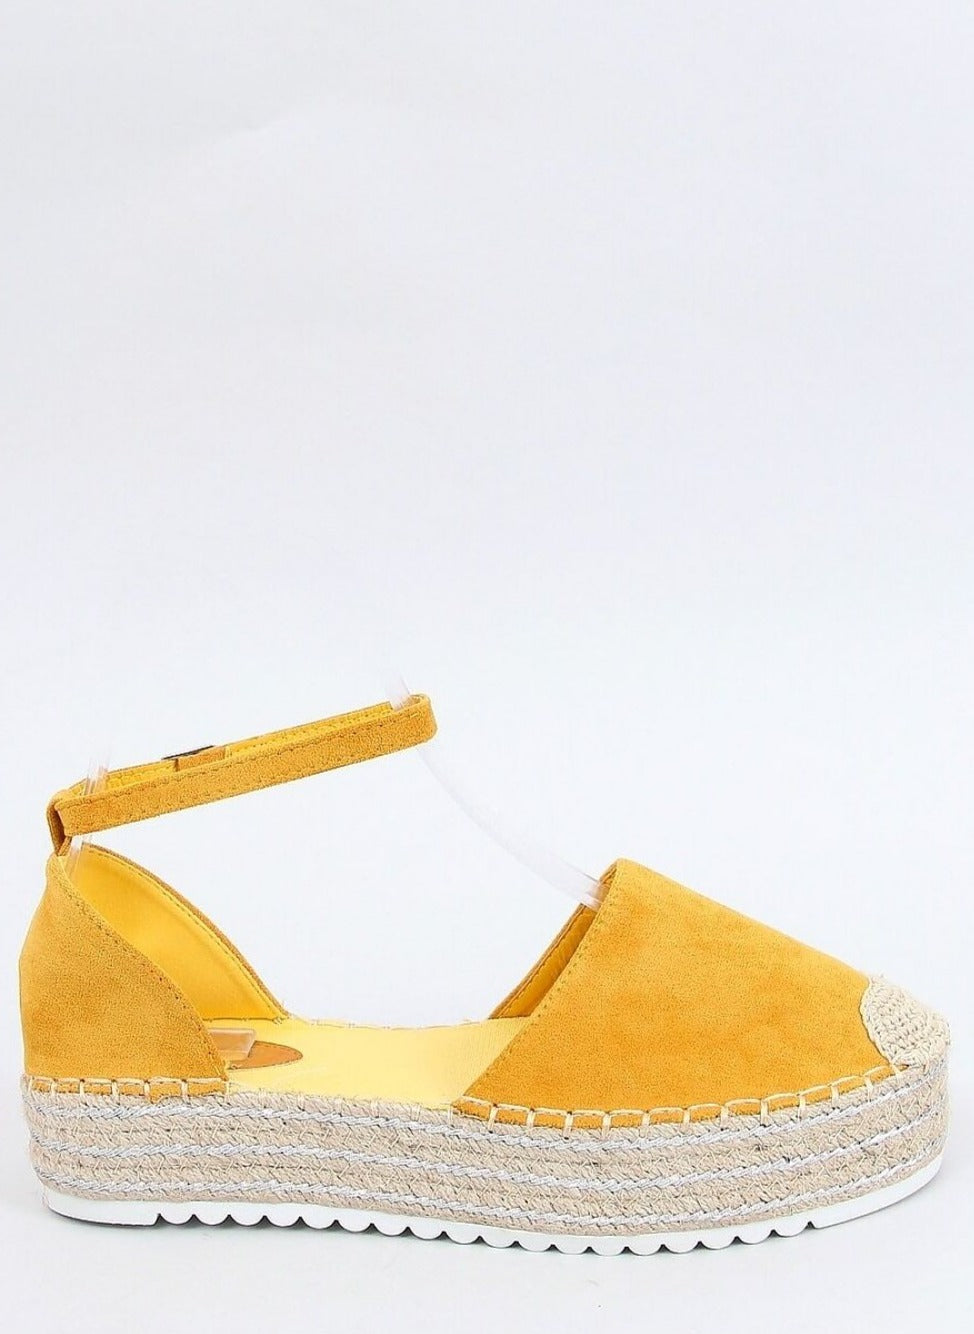 TEEK - Yellow Ankle Strap Platform Espadrille Shoes SHOES TEEK MH 5.5  